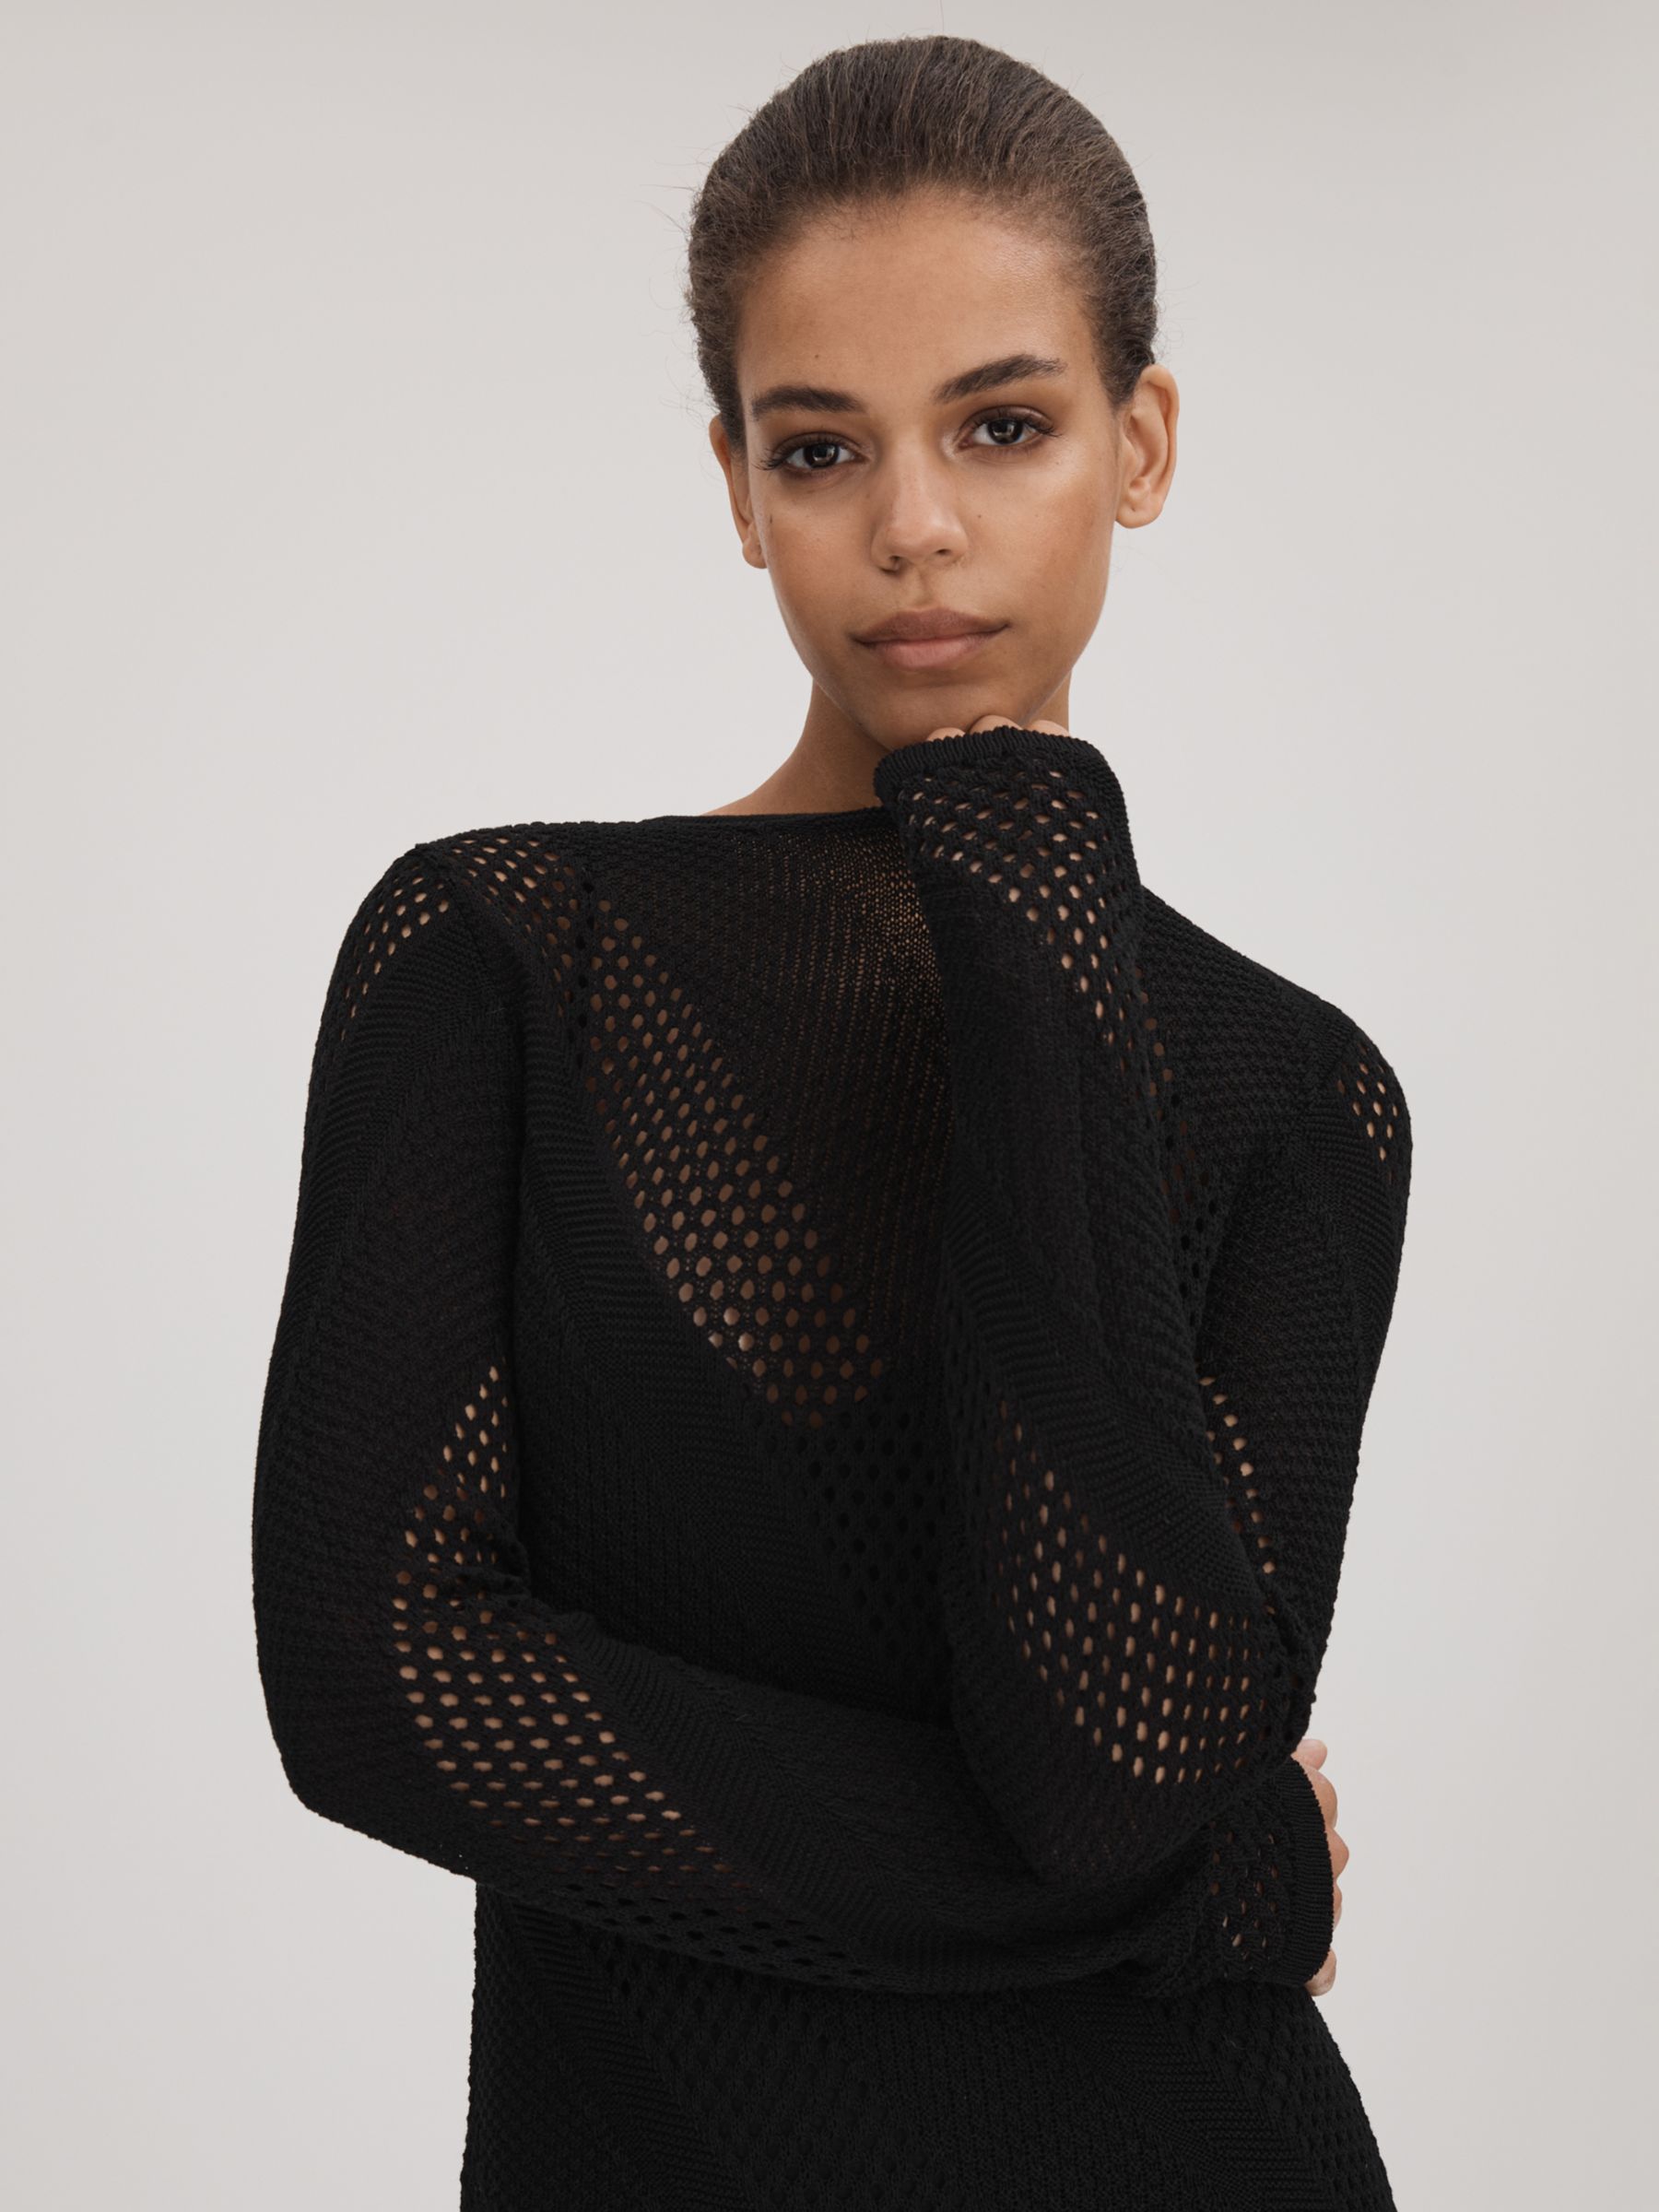 FLORERE Crochet Midaxi Dress, Black at John Lewis & Partners